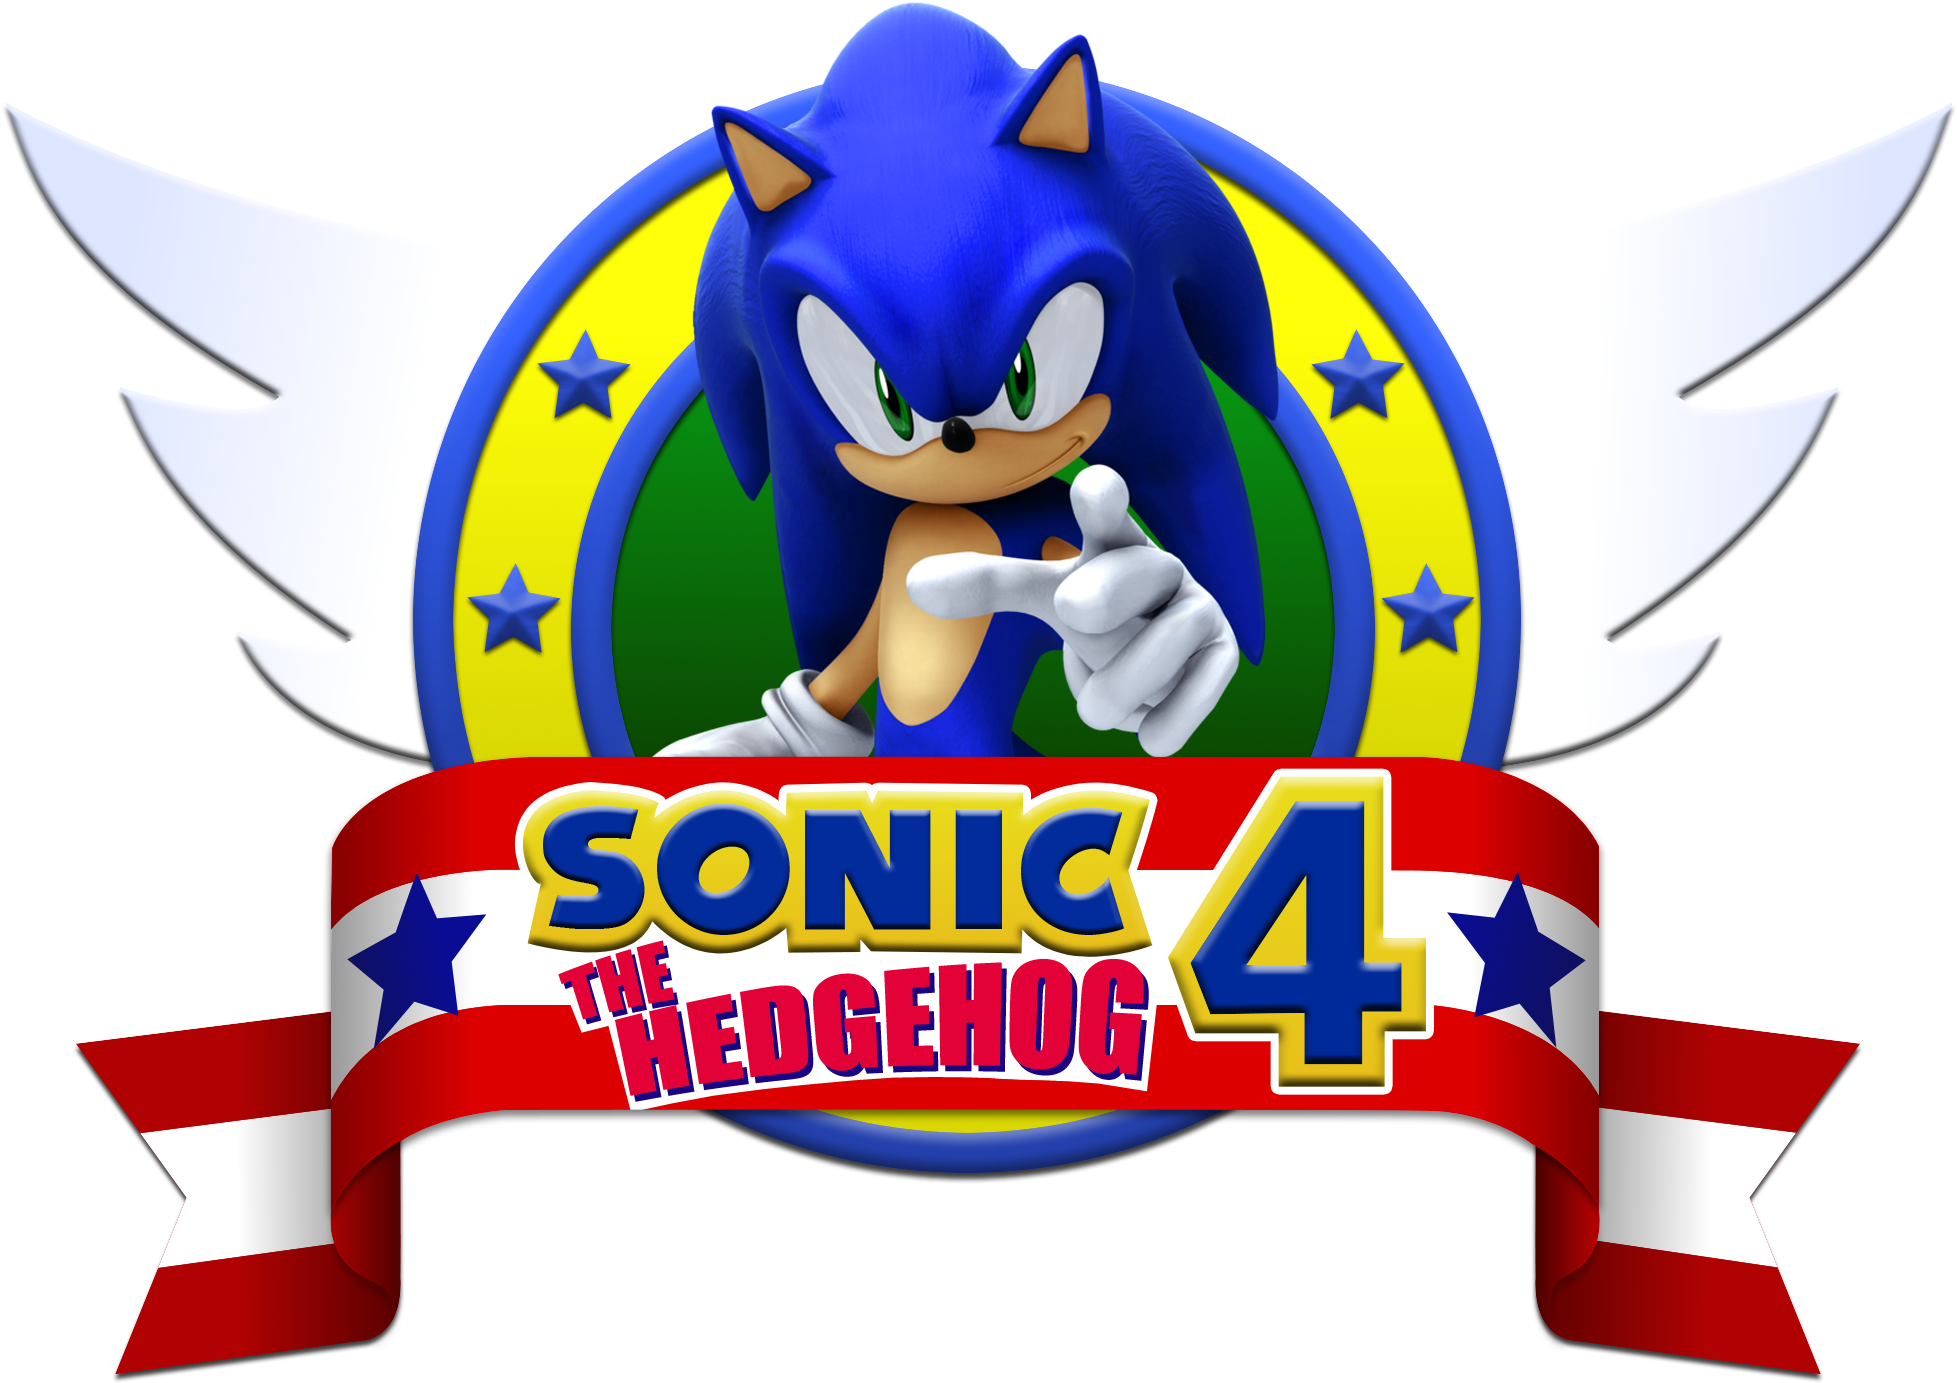 Sonic The Hedgehog 4 Episode 2 (2000x1542)